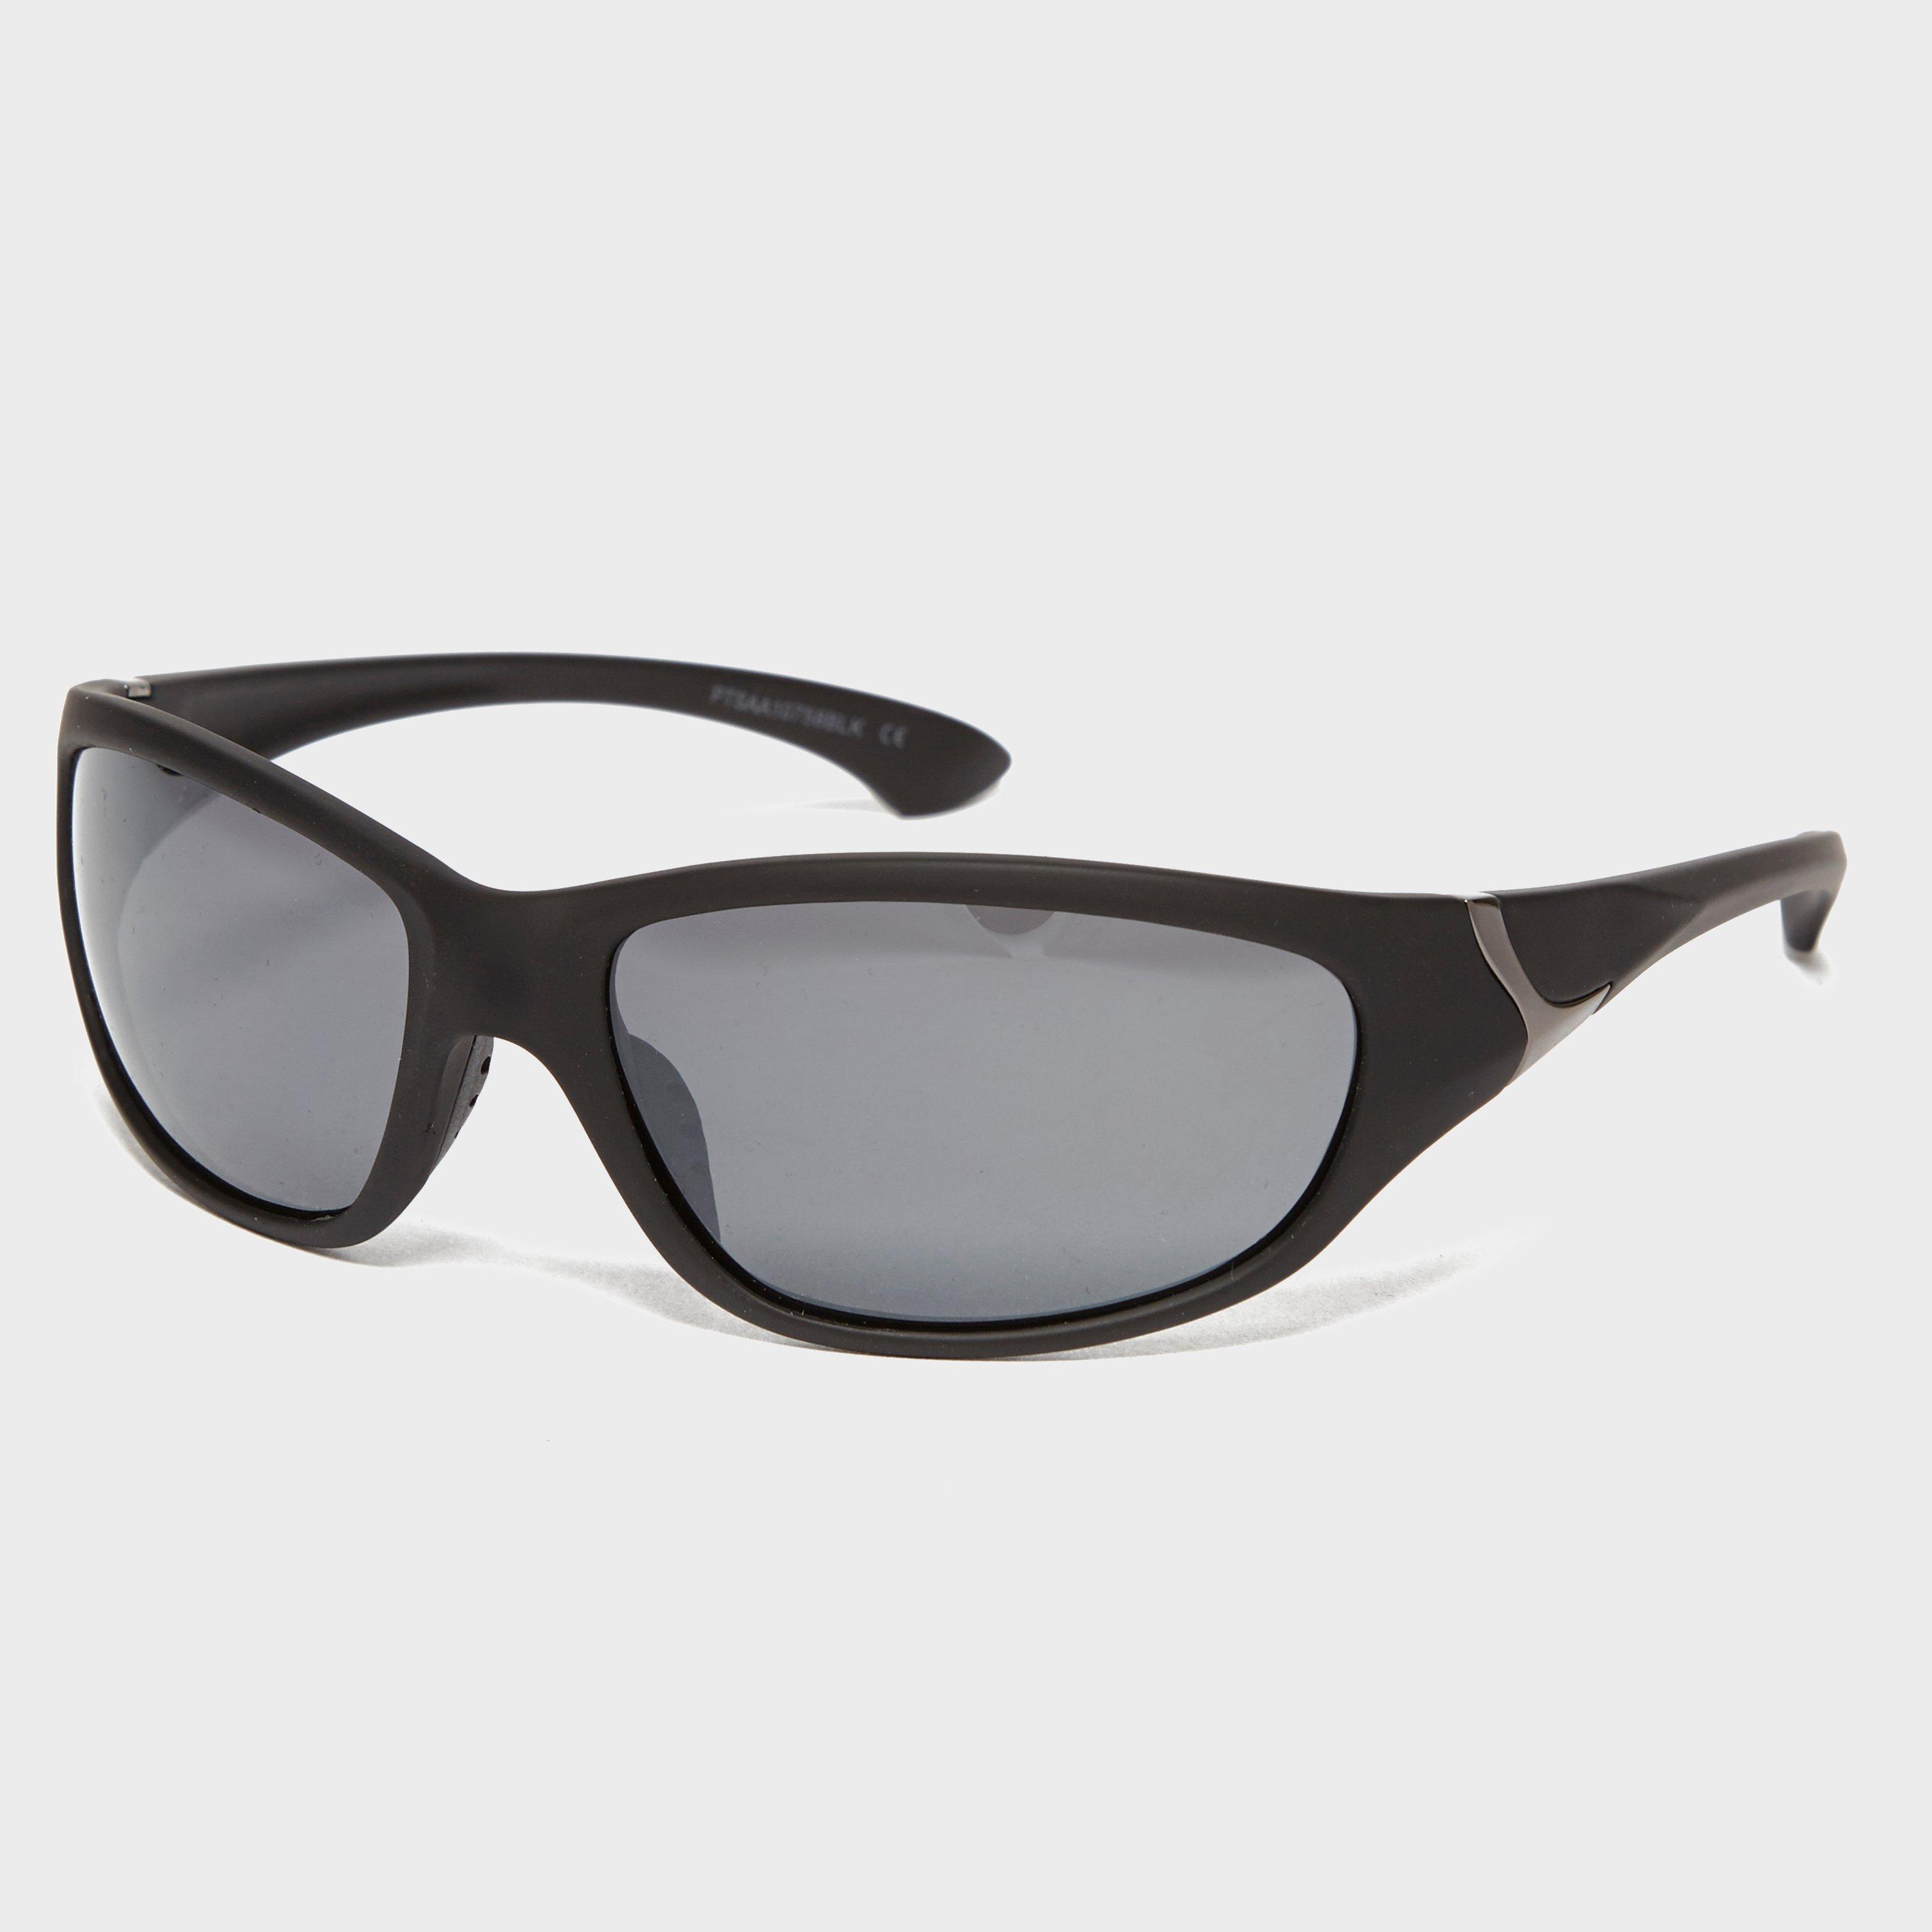 Peter Storm Mens Rubber Sunglasses - Black/blk  Black/blk